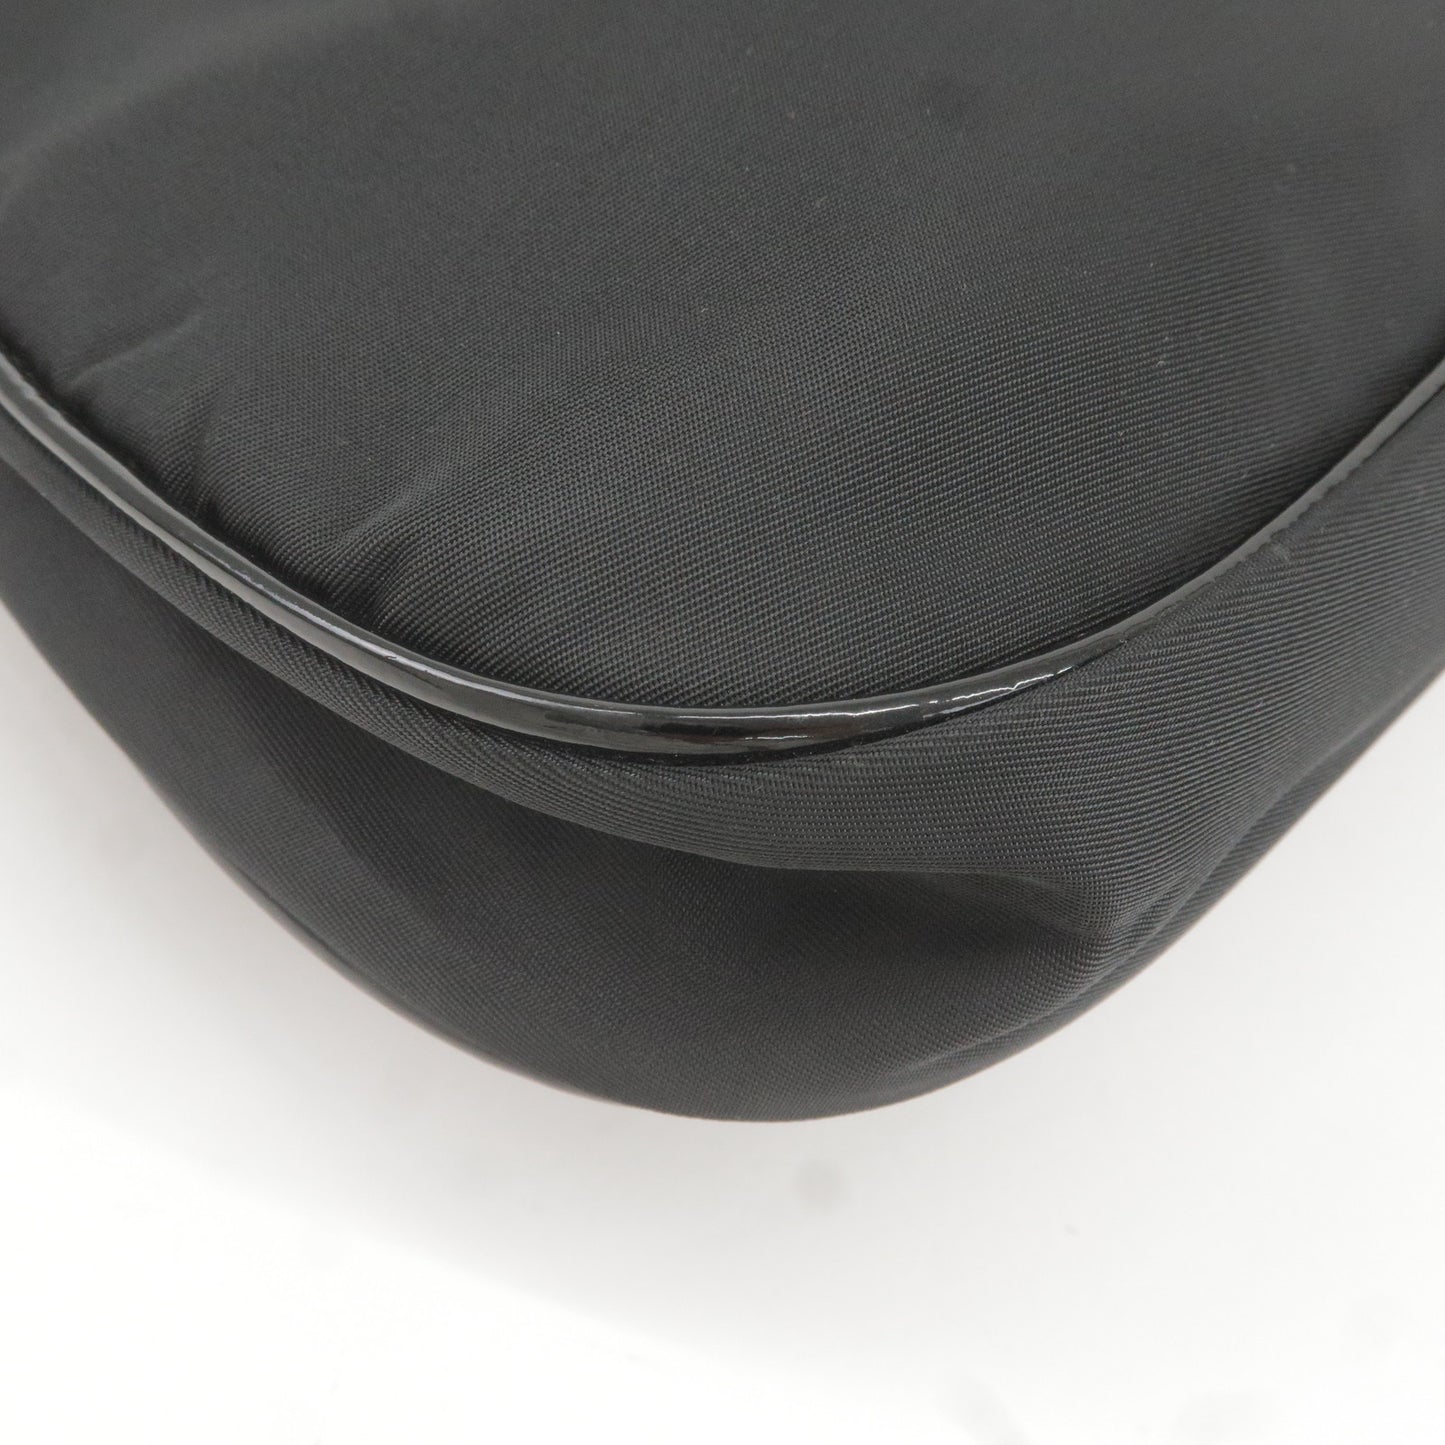 PRADA Logo Nylon Enamel Shoulder Bag Purse Hand Bag Black